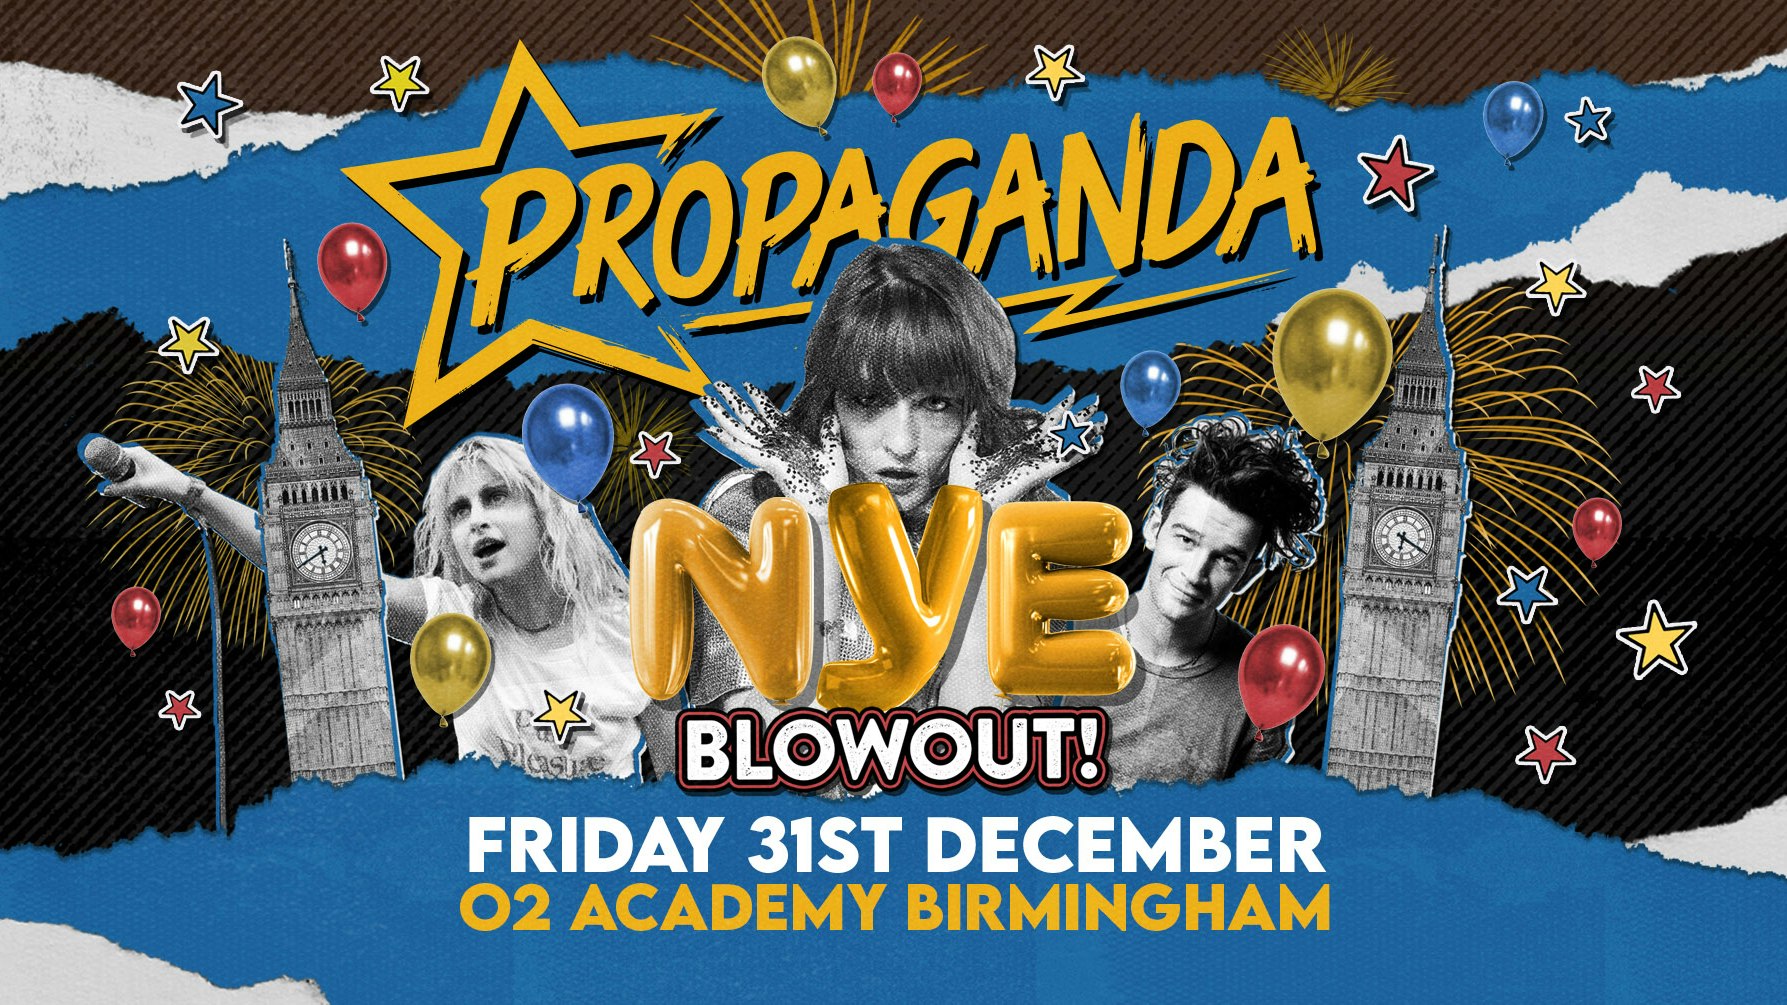 Propaganda Birmingham – New Year’s Eve Blowout!